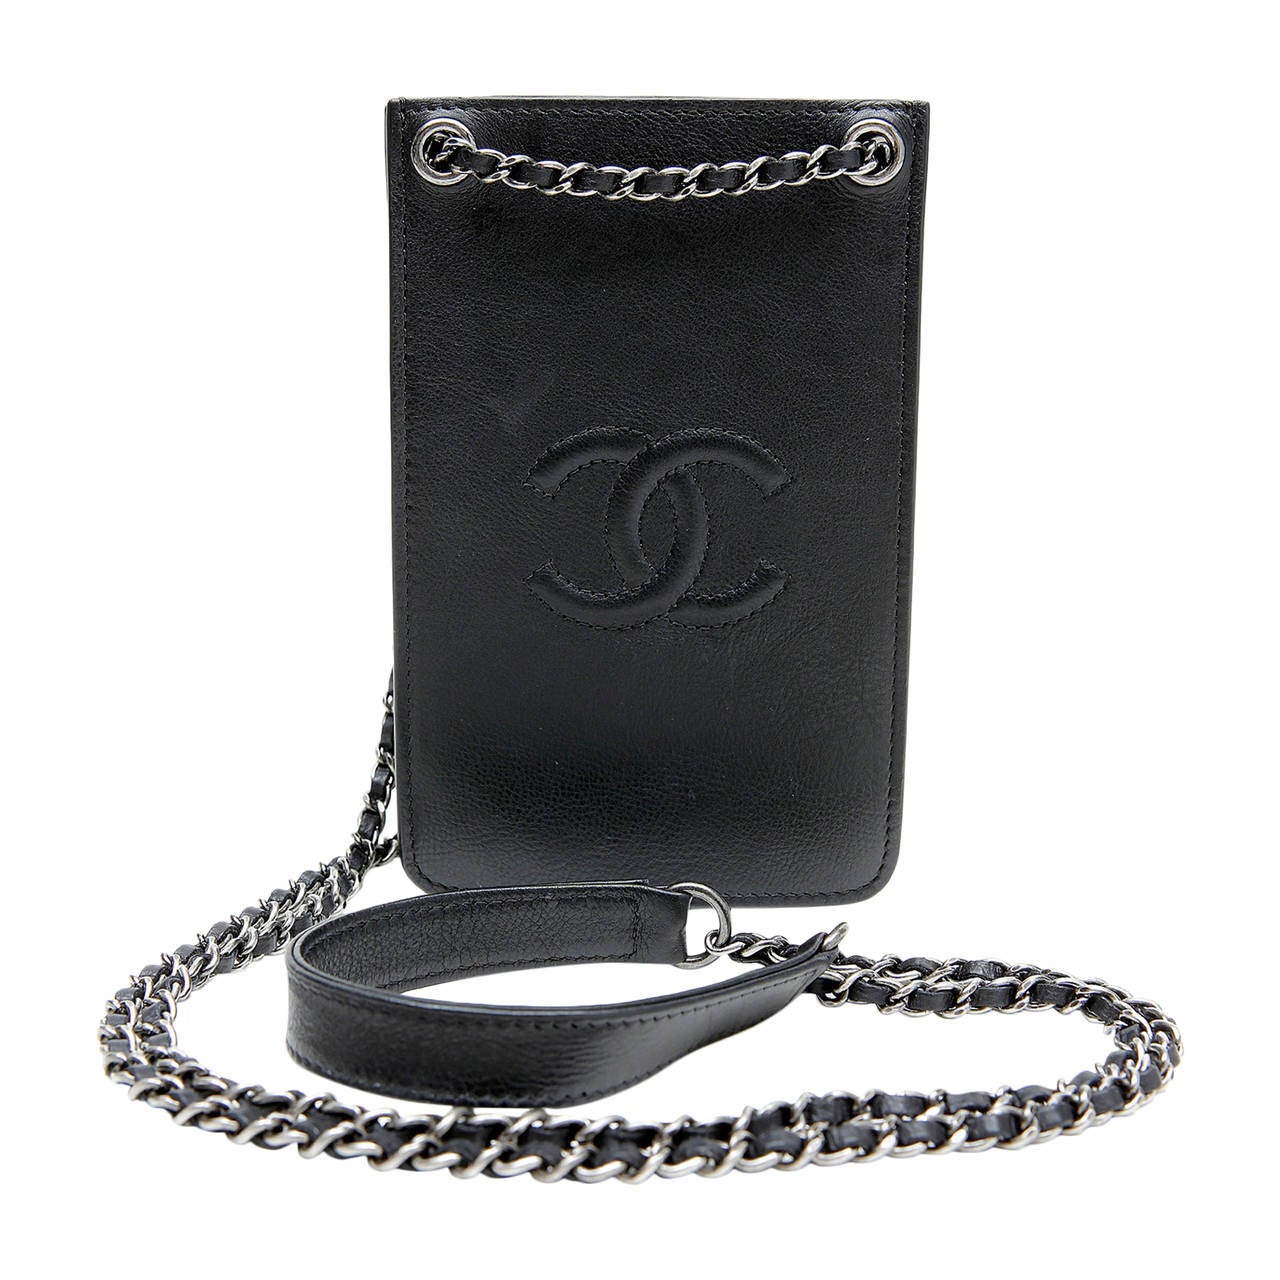 Chanel Black Leather Mini Cross Body Bag at 1stdibs